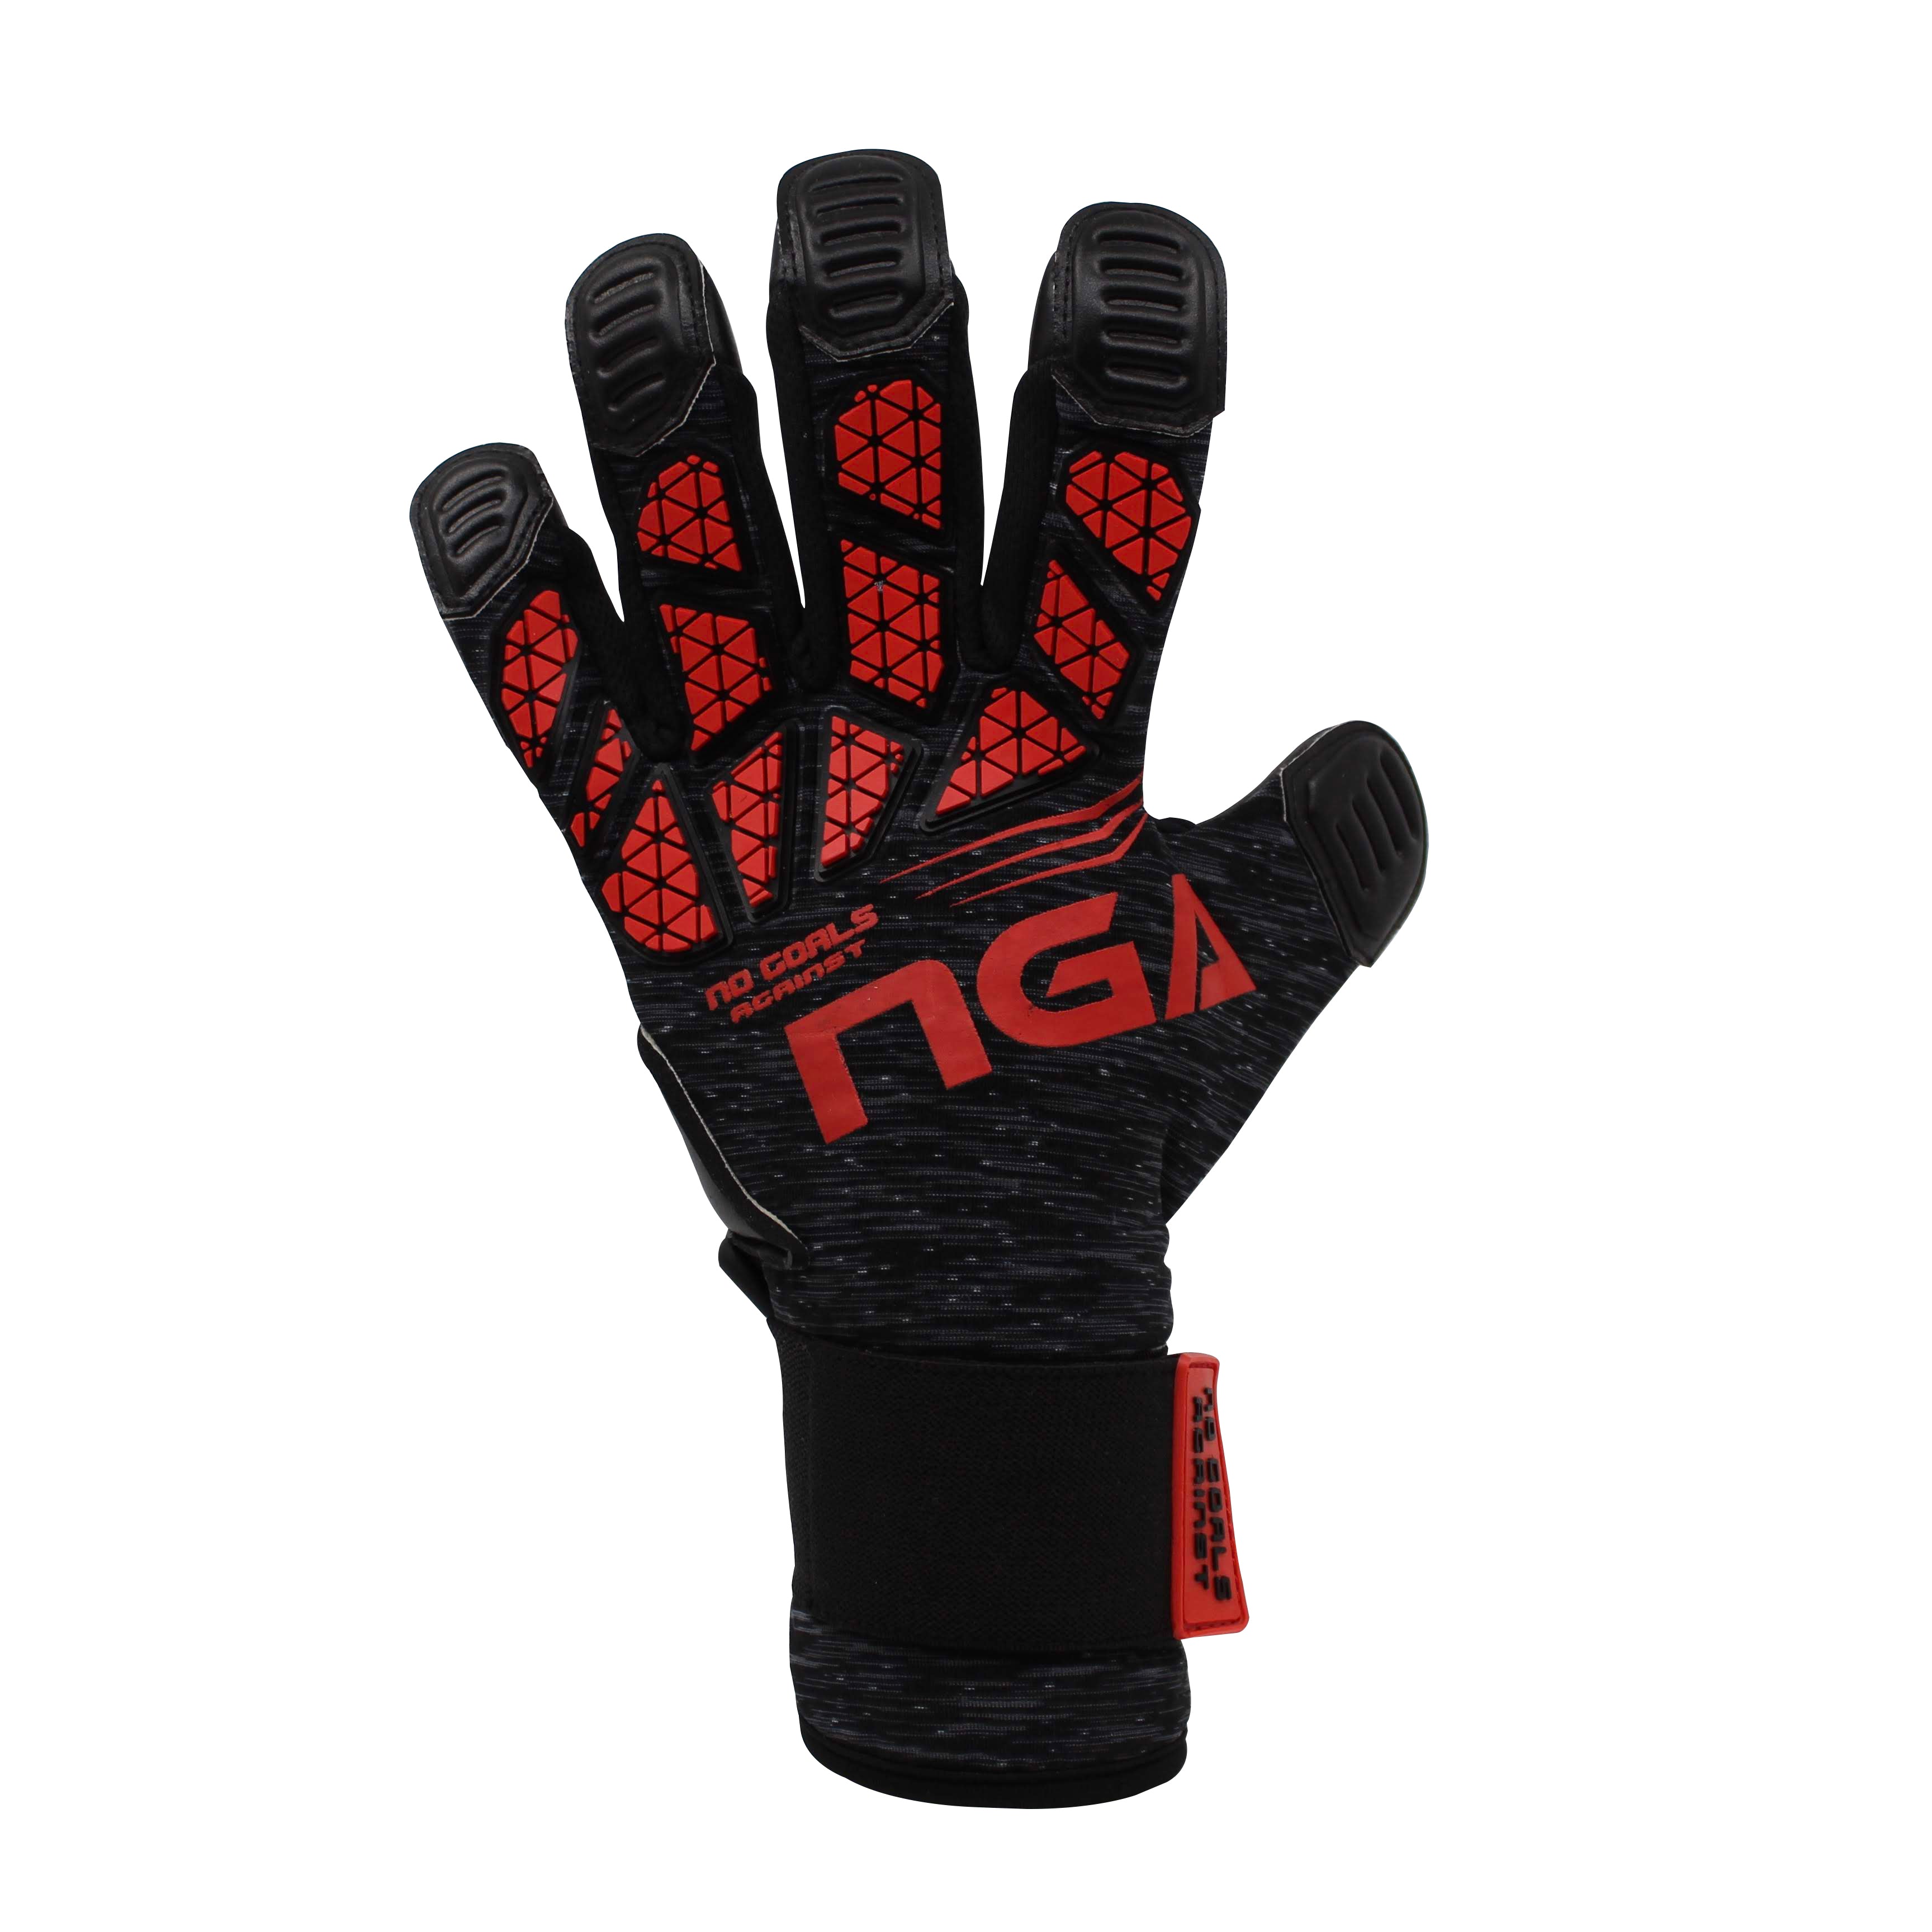 Venture Black Goalkeeper Glove